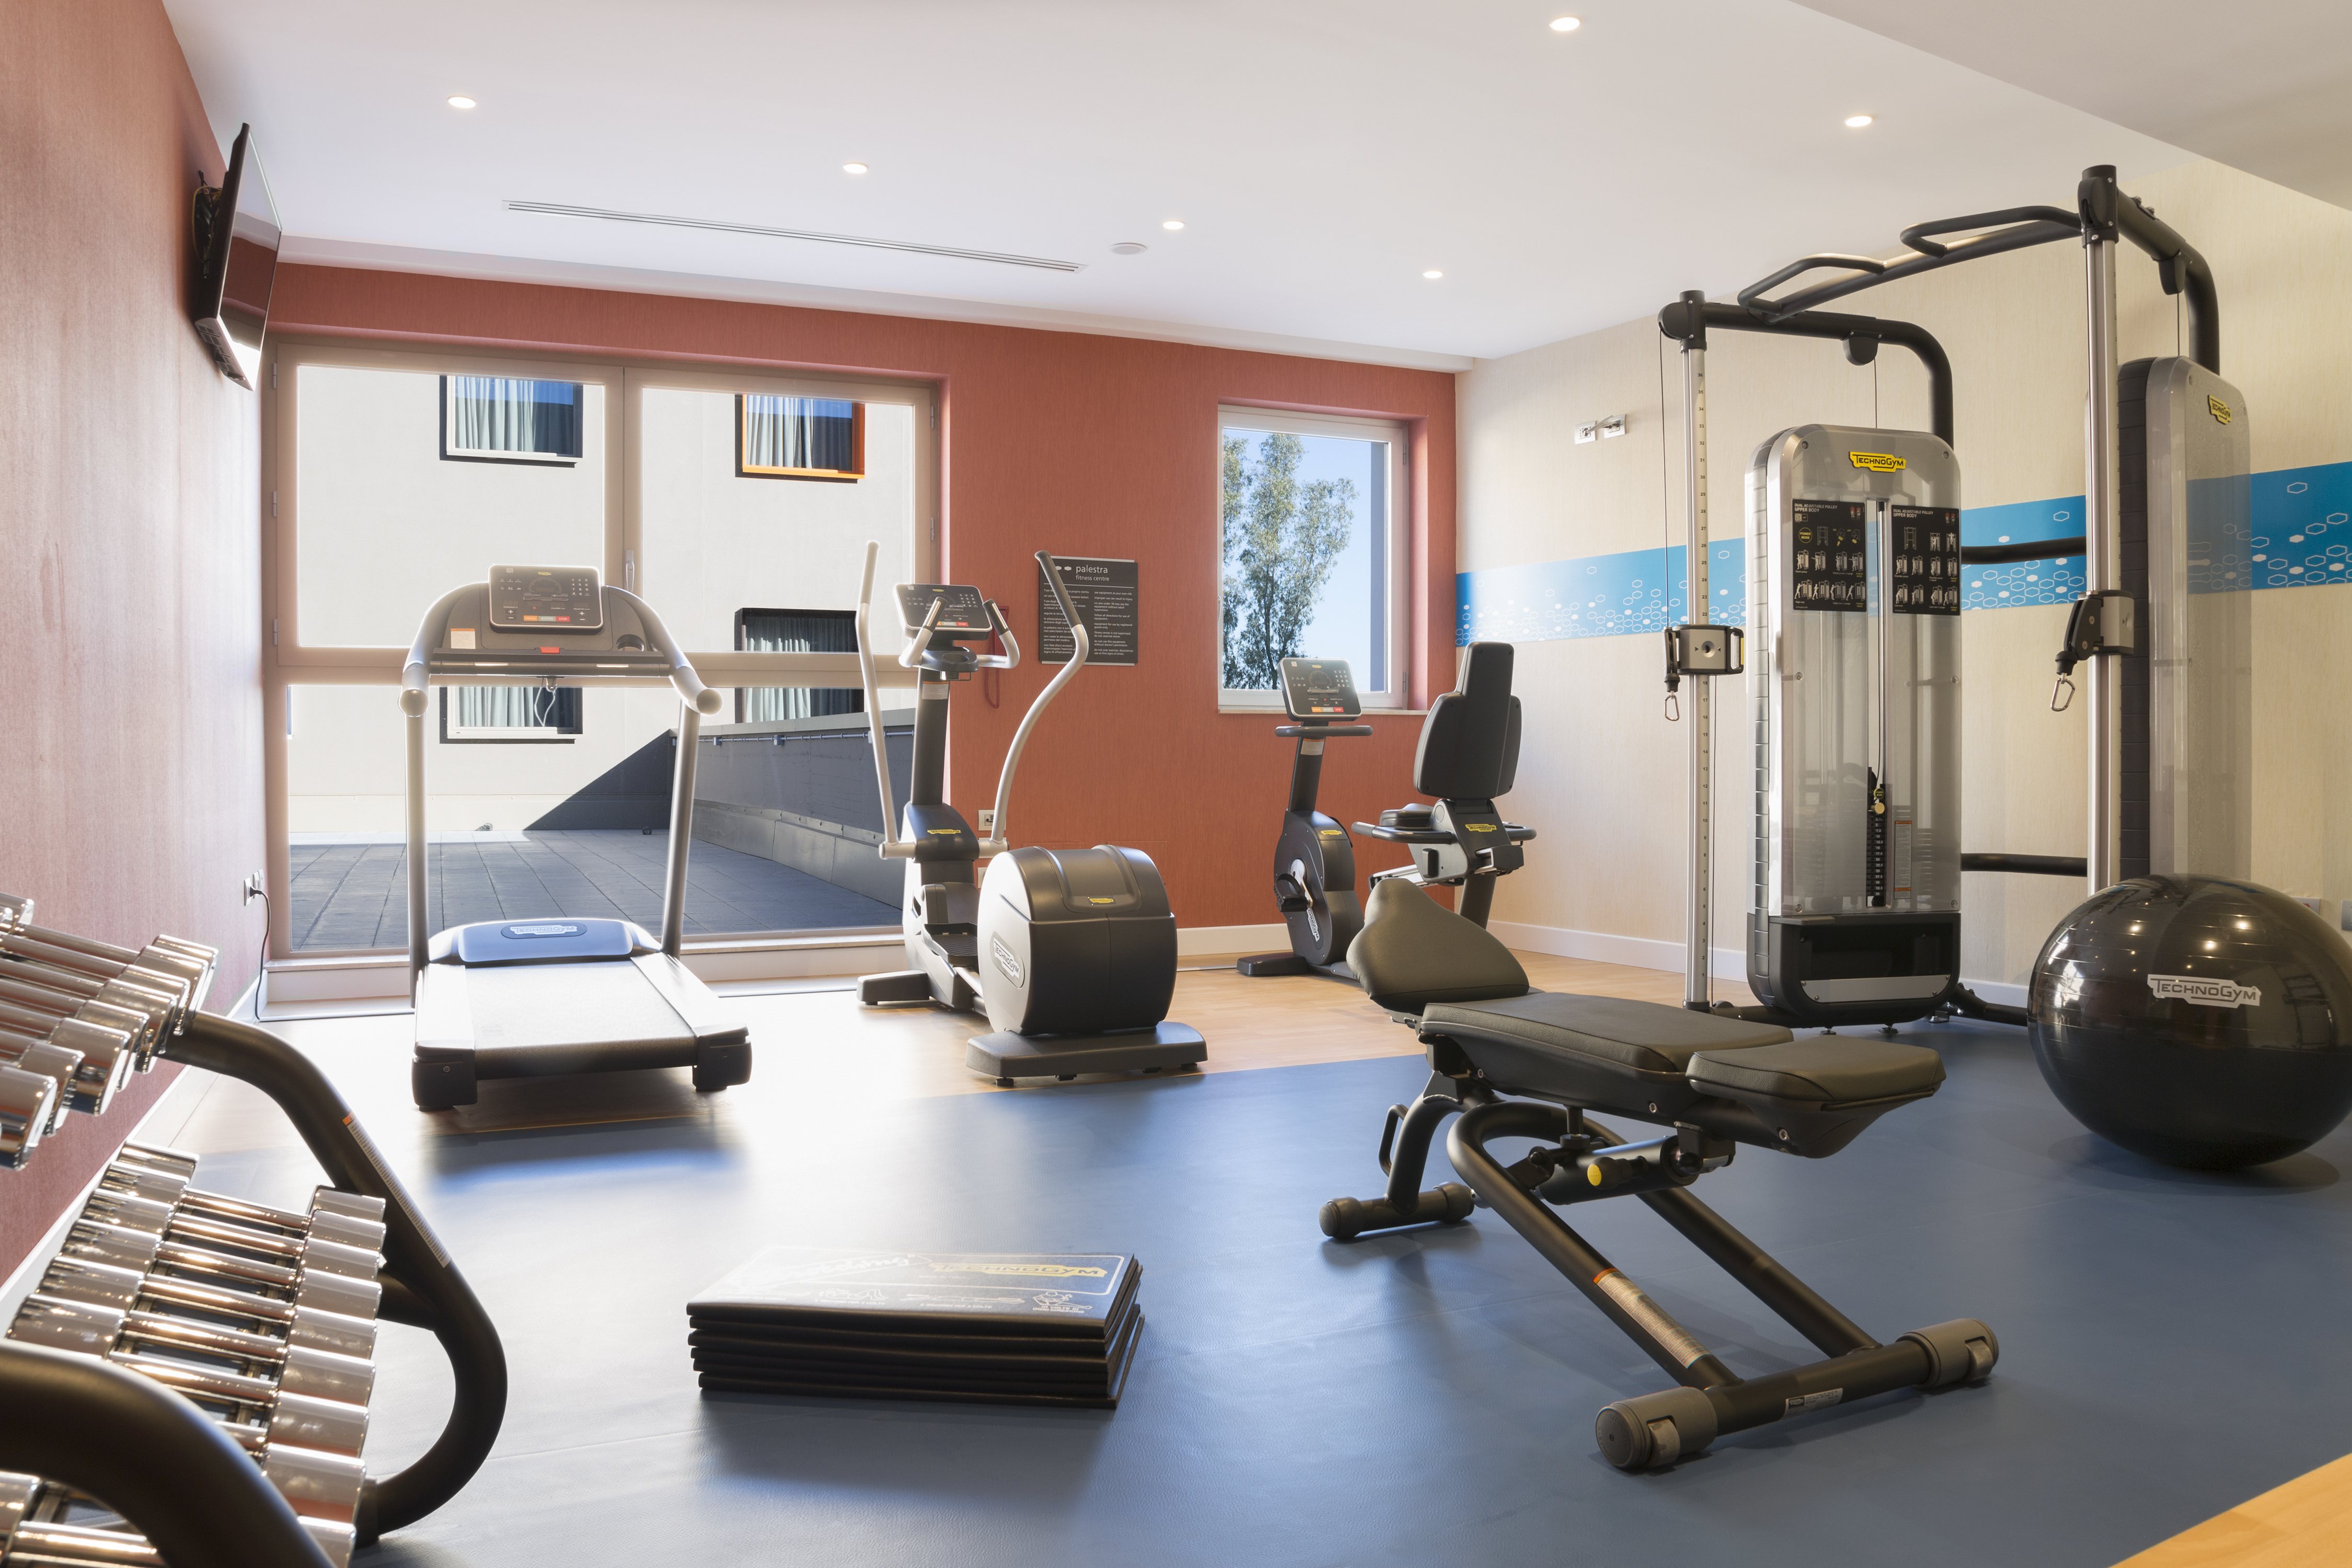 Fitness center - Panca e rastrelliera per i pesi, attrezzature cardiovascolari